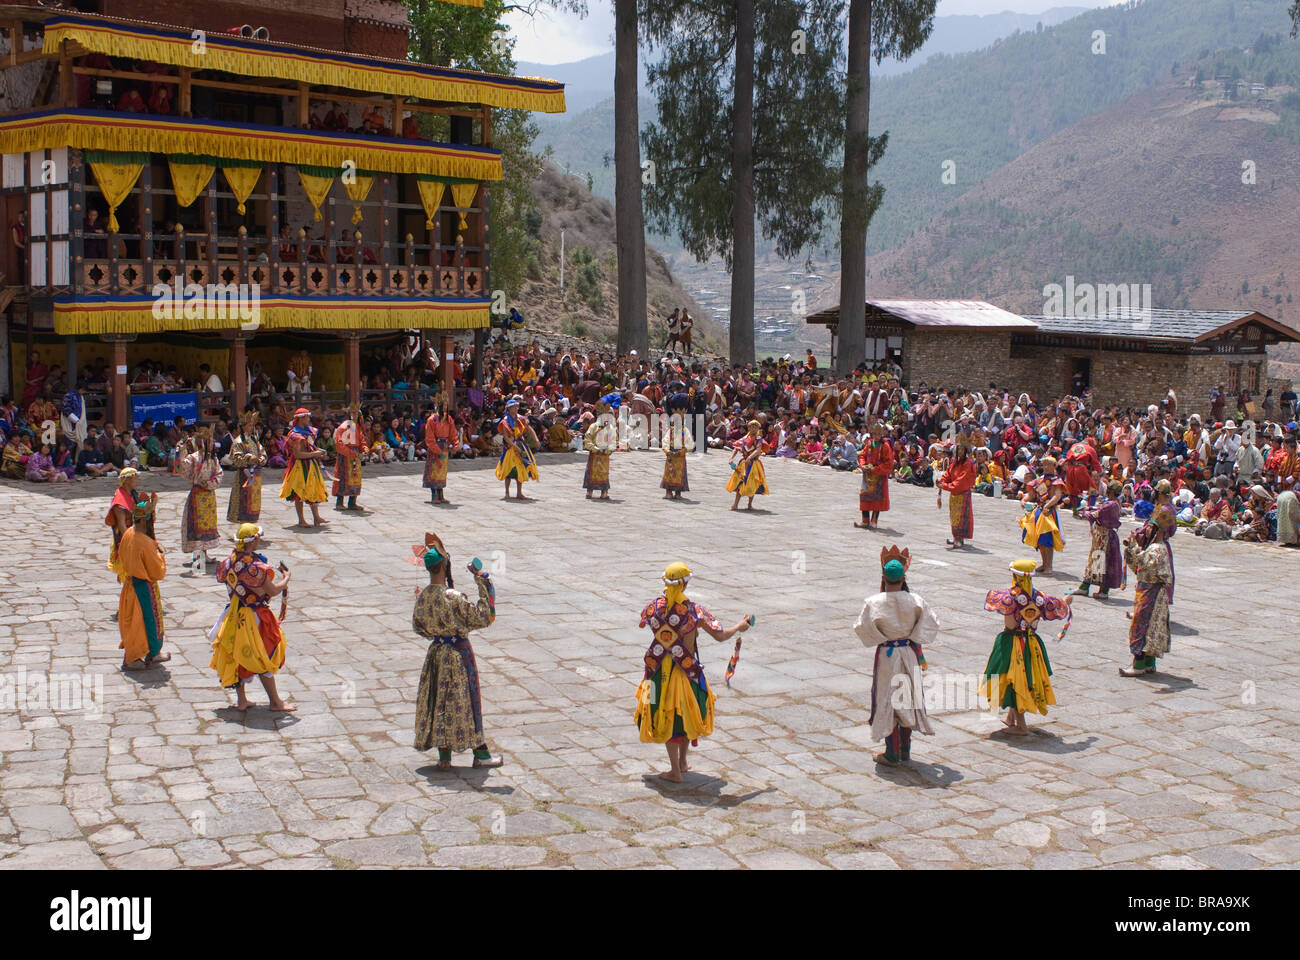 Costumed dancers at religious festival with many visitors, Paro Tsechu, Paro, Bhutan, Asia Stock Photo